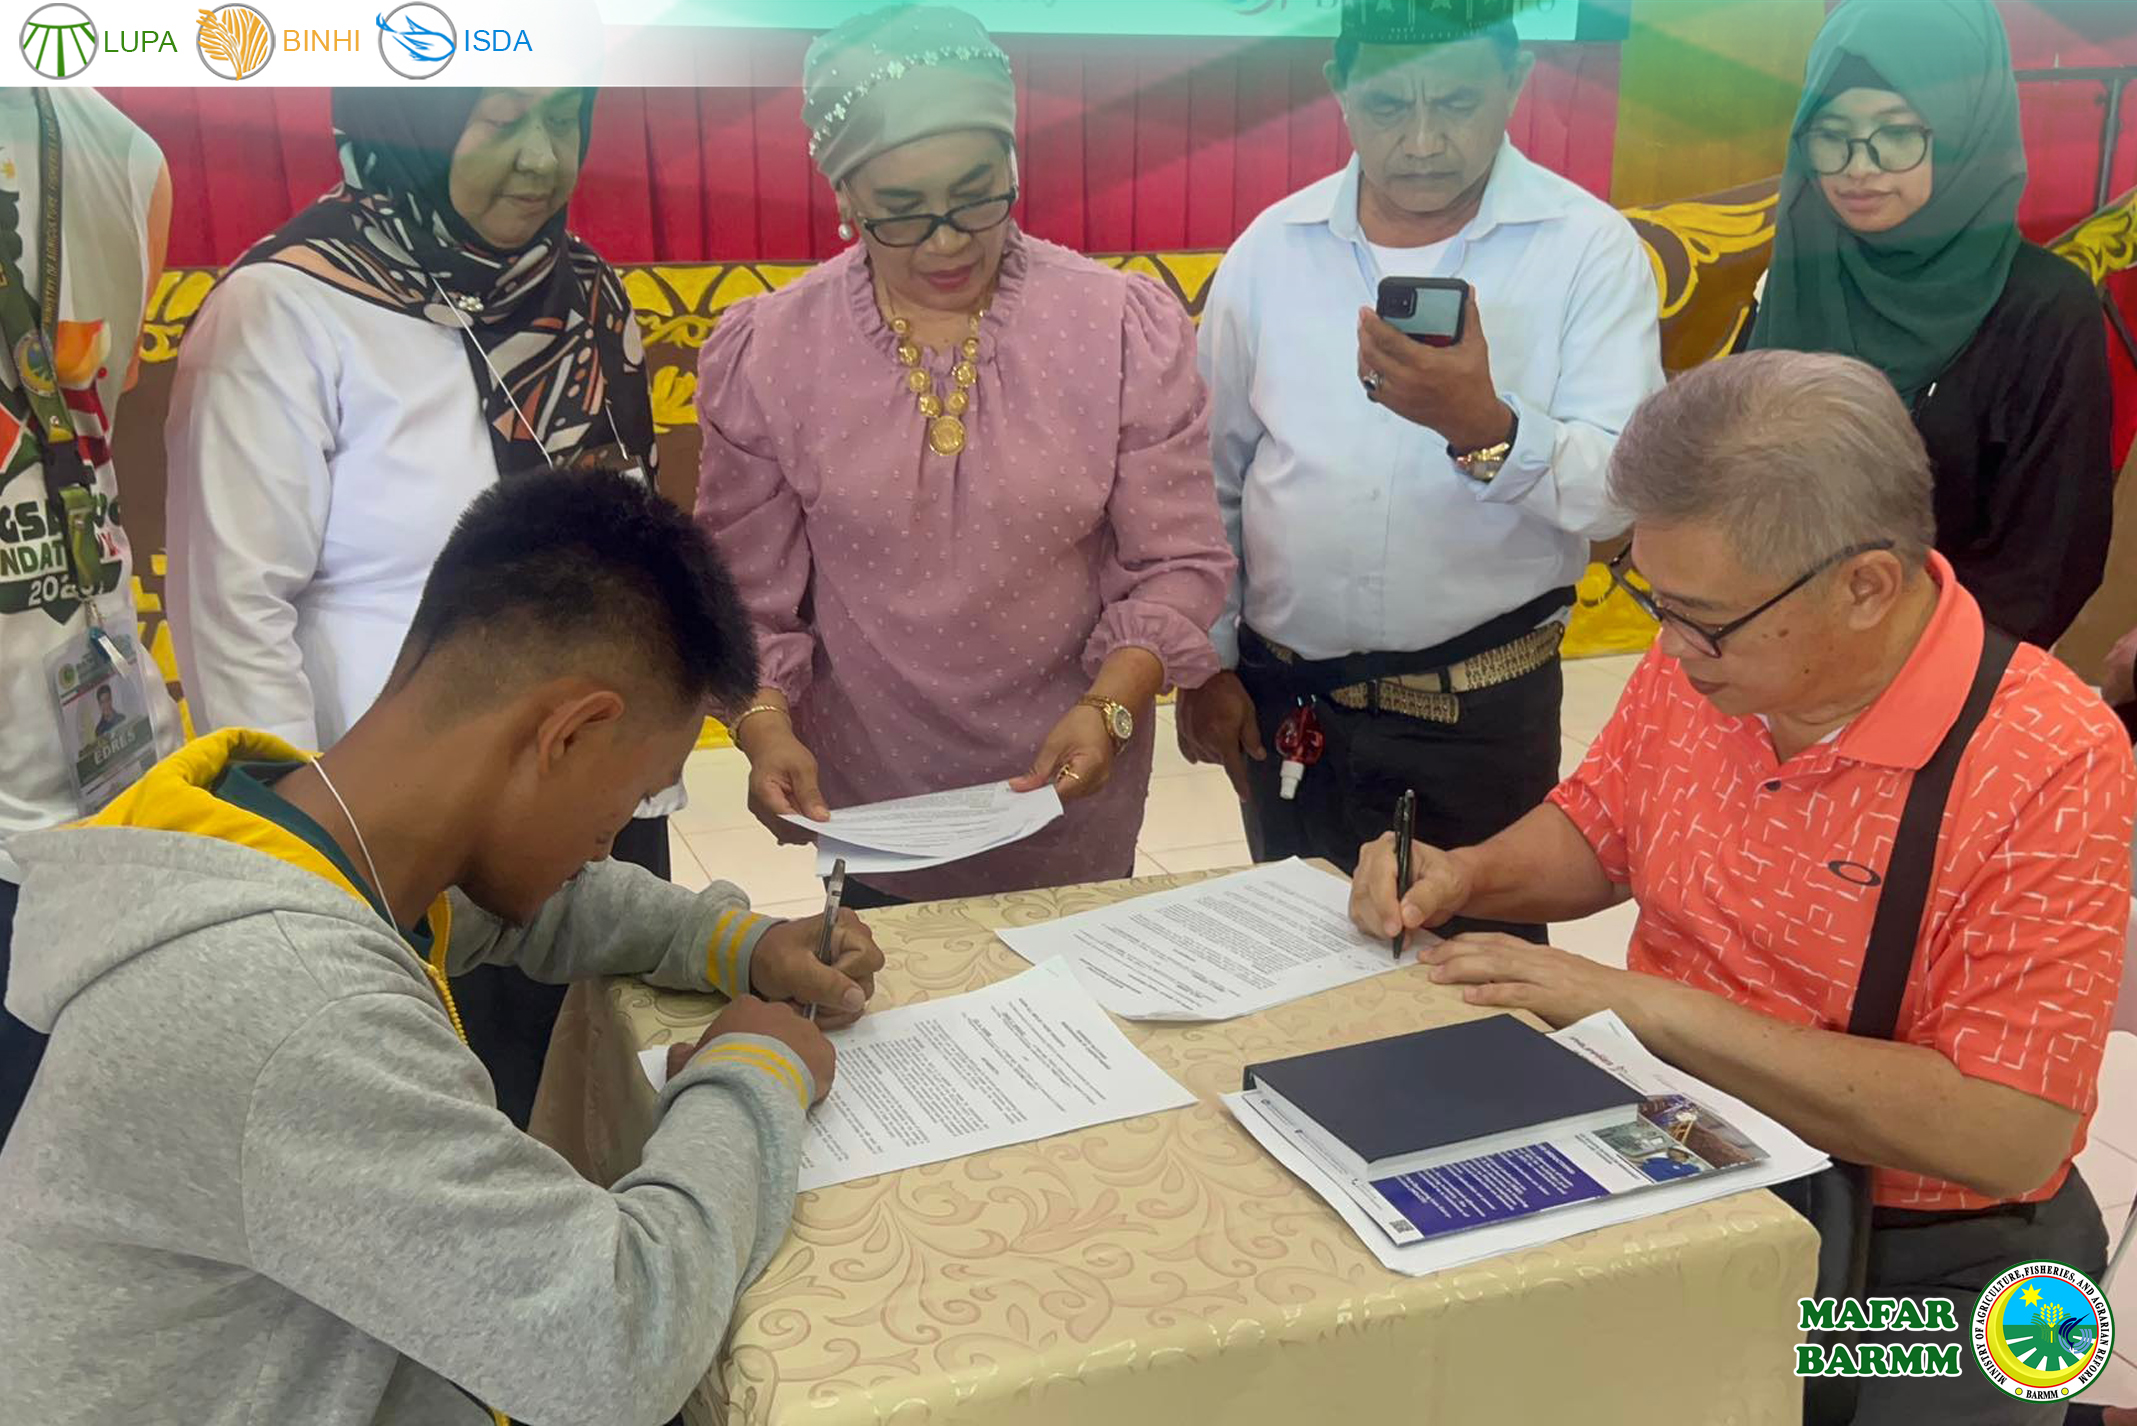 MAFAR, FCA inks MOA with businessmen in Tawi-Tawi